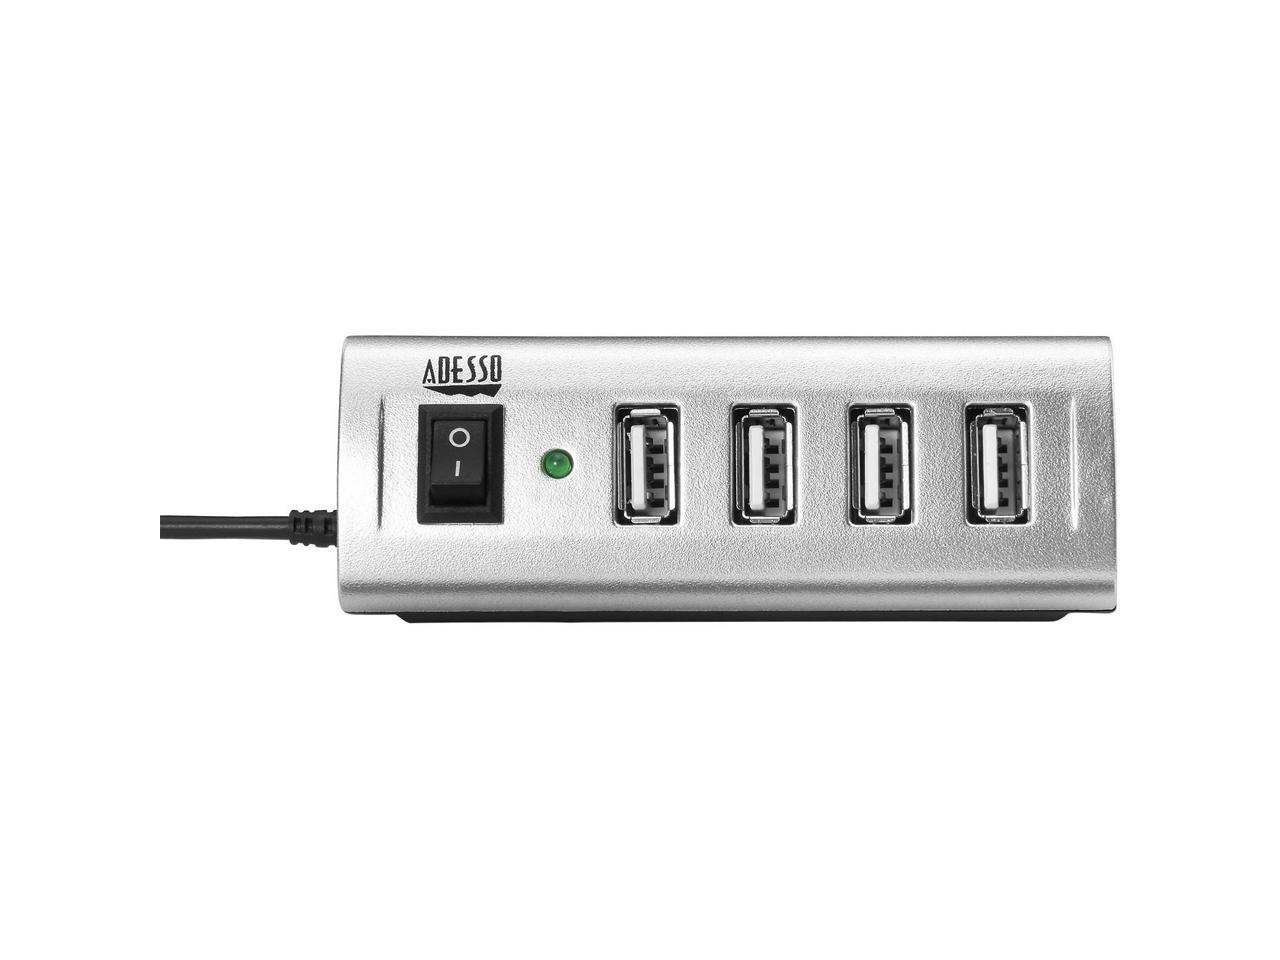 Adesso AUH-2040 4-Port USB 2.0 Hub